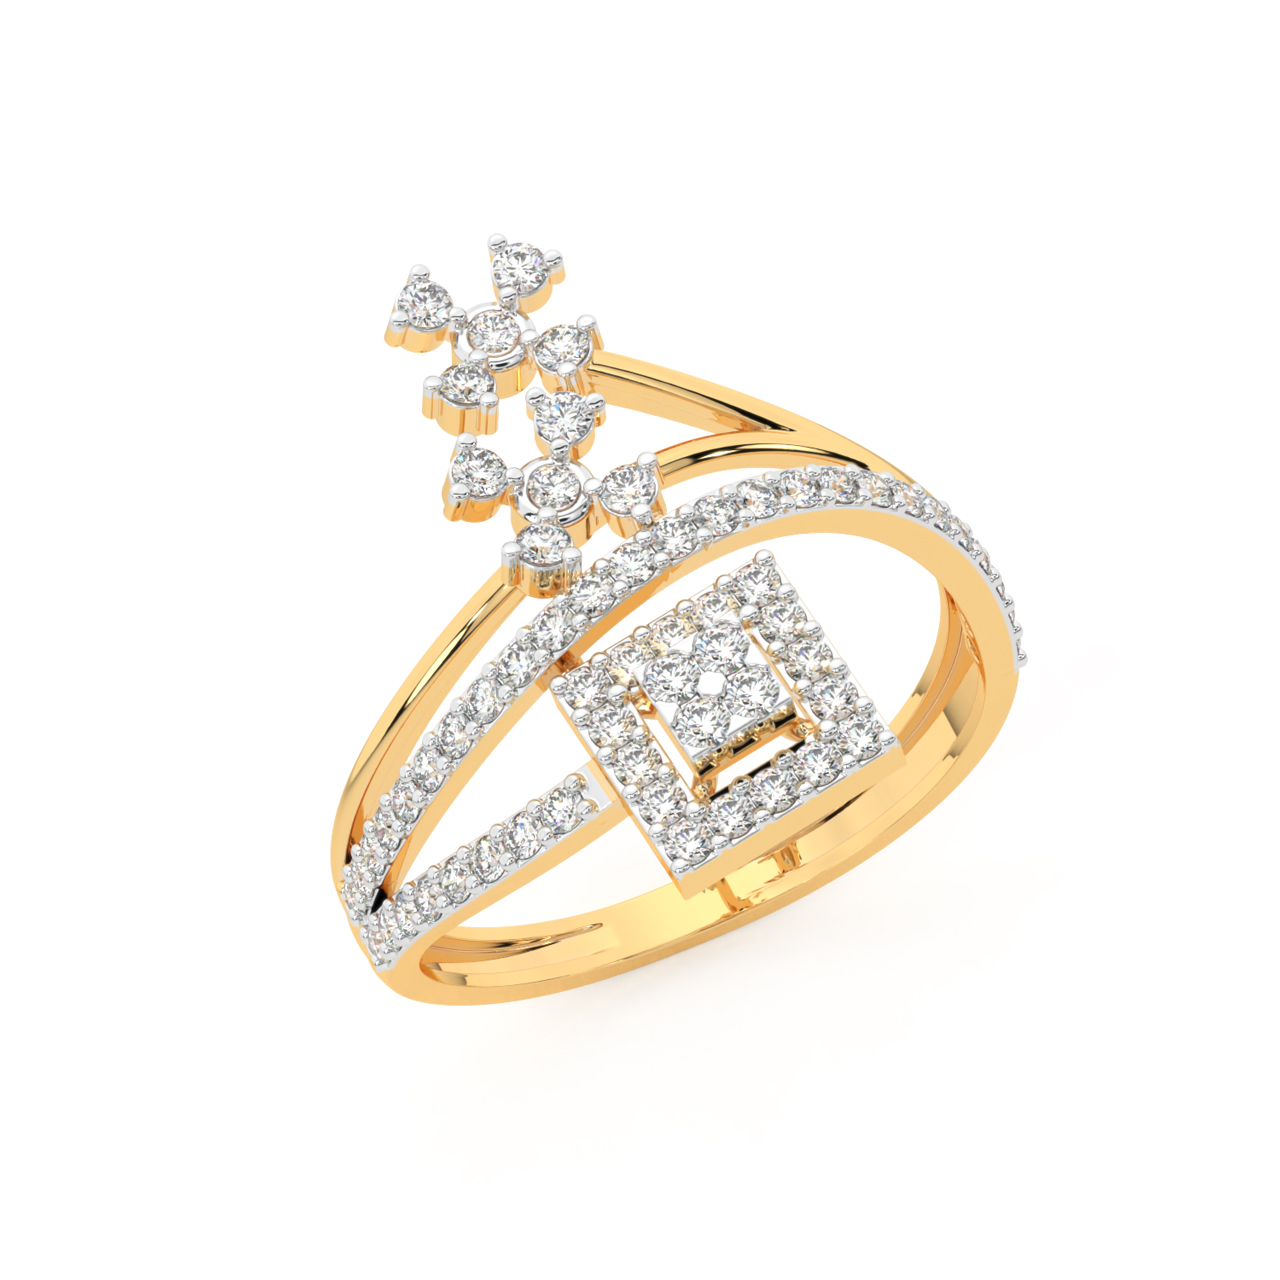 Floral Stylist Diamond Ring